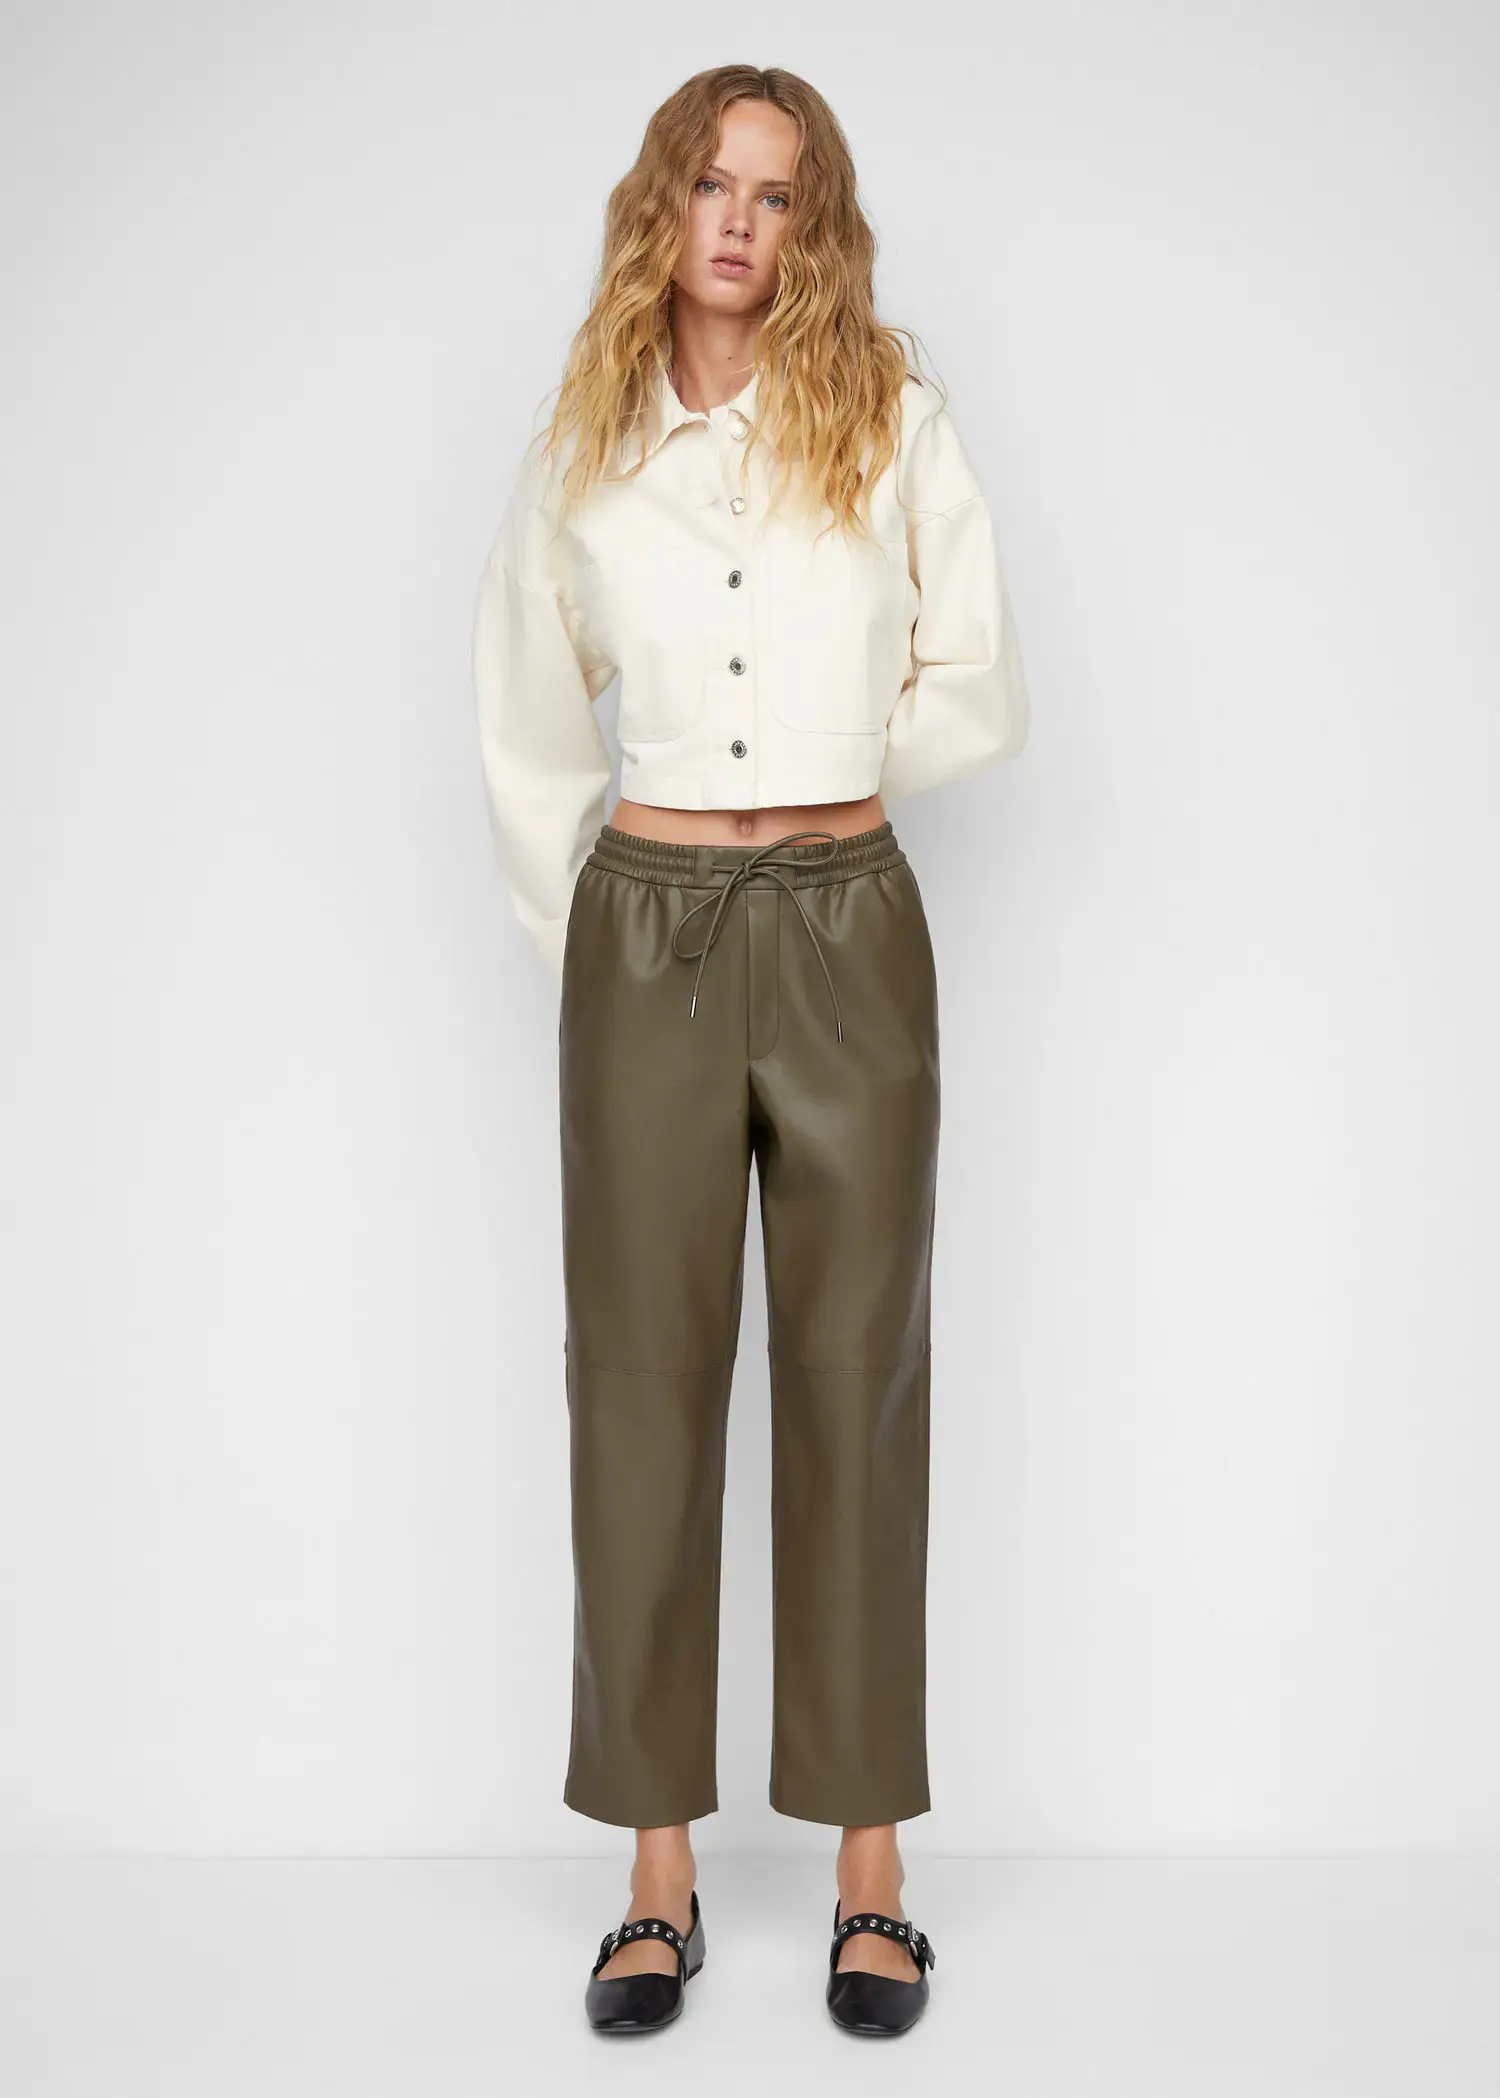 MANGO Flat Front Leather Pants for Women | Mercari